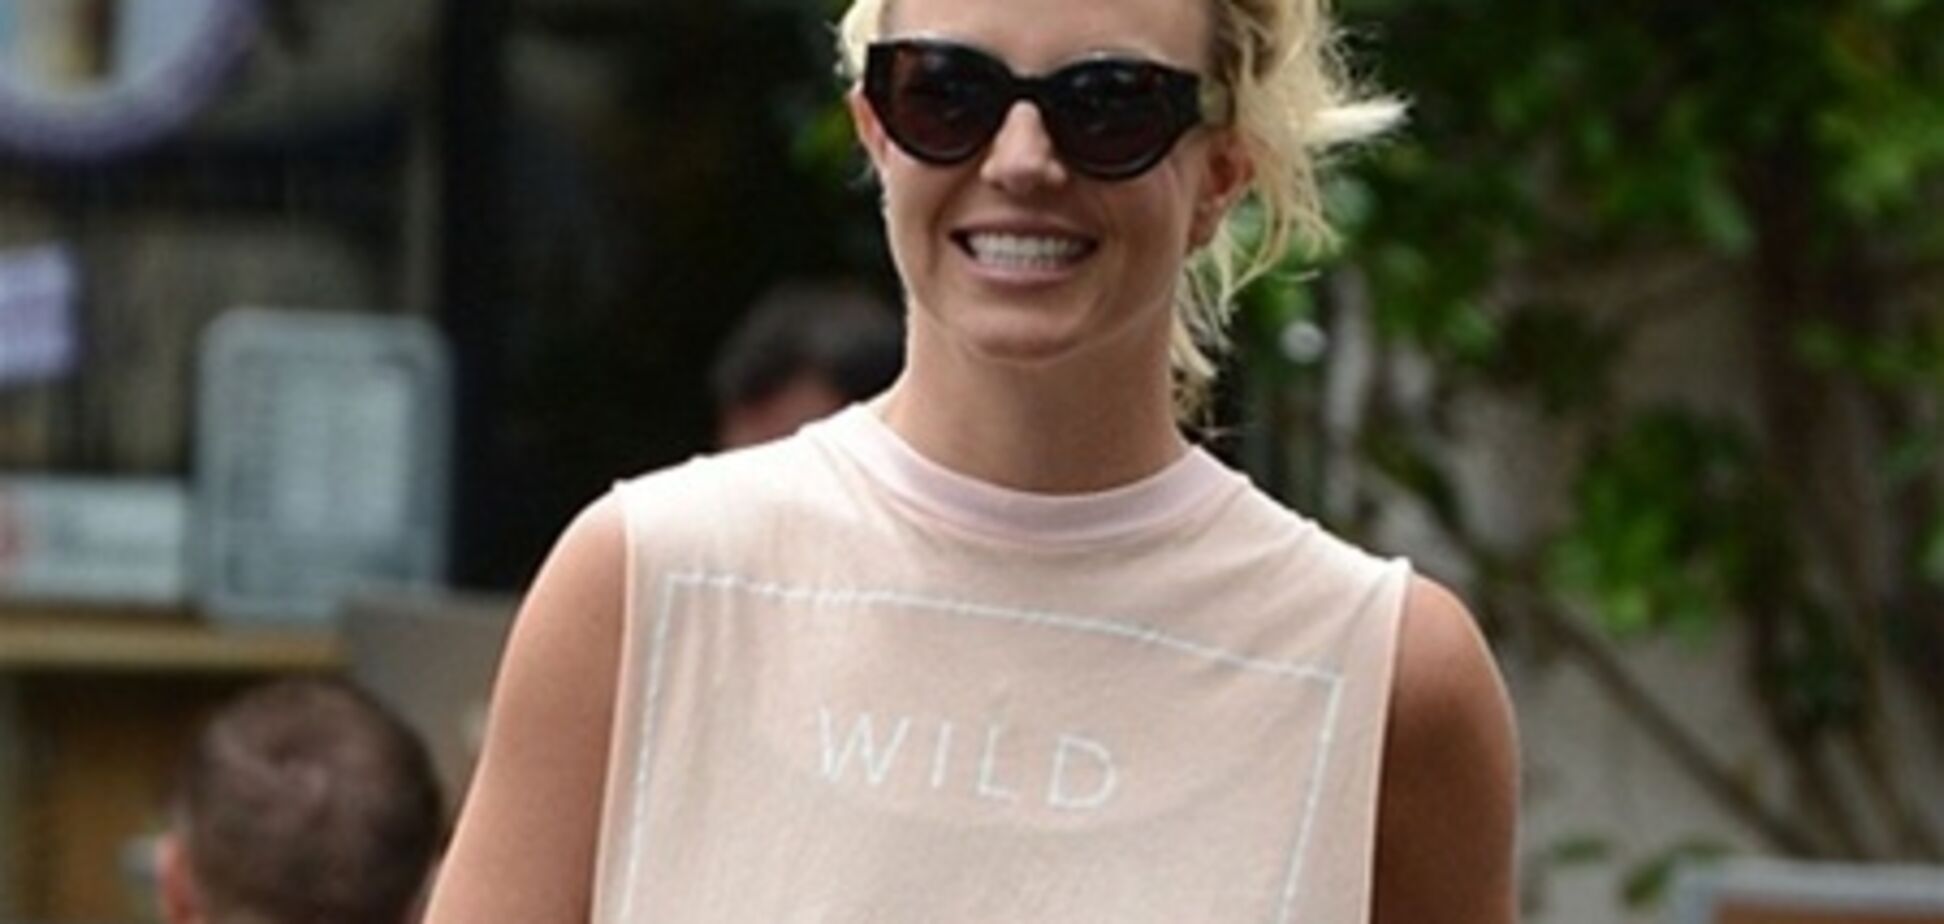 Бритни Спирс пополнила арсенал футболок с дурацкими надписями